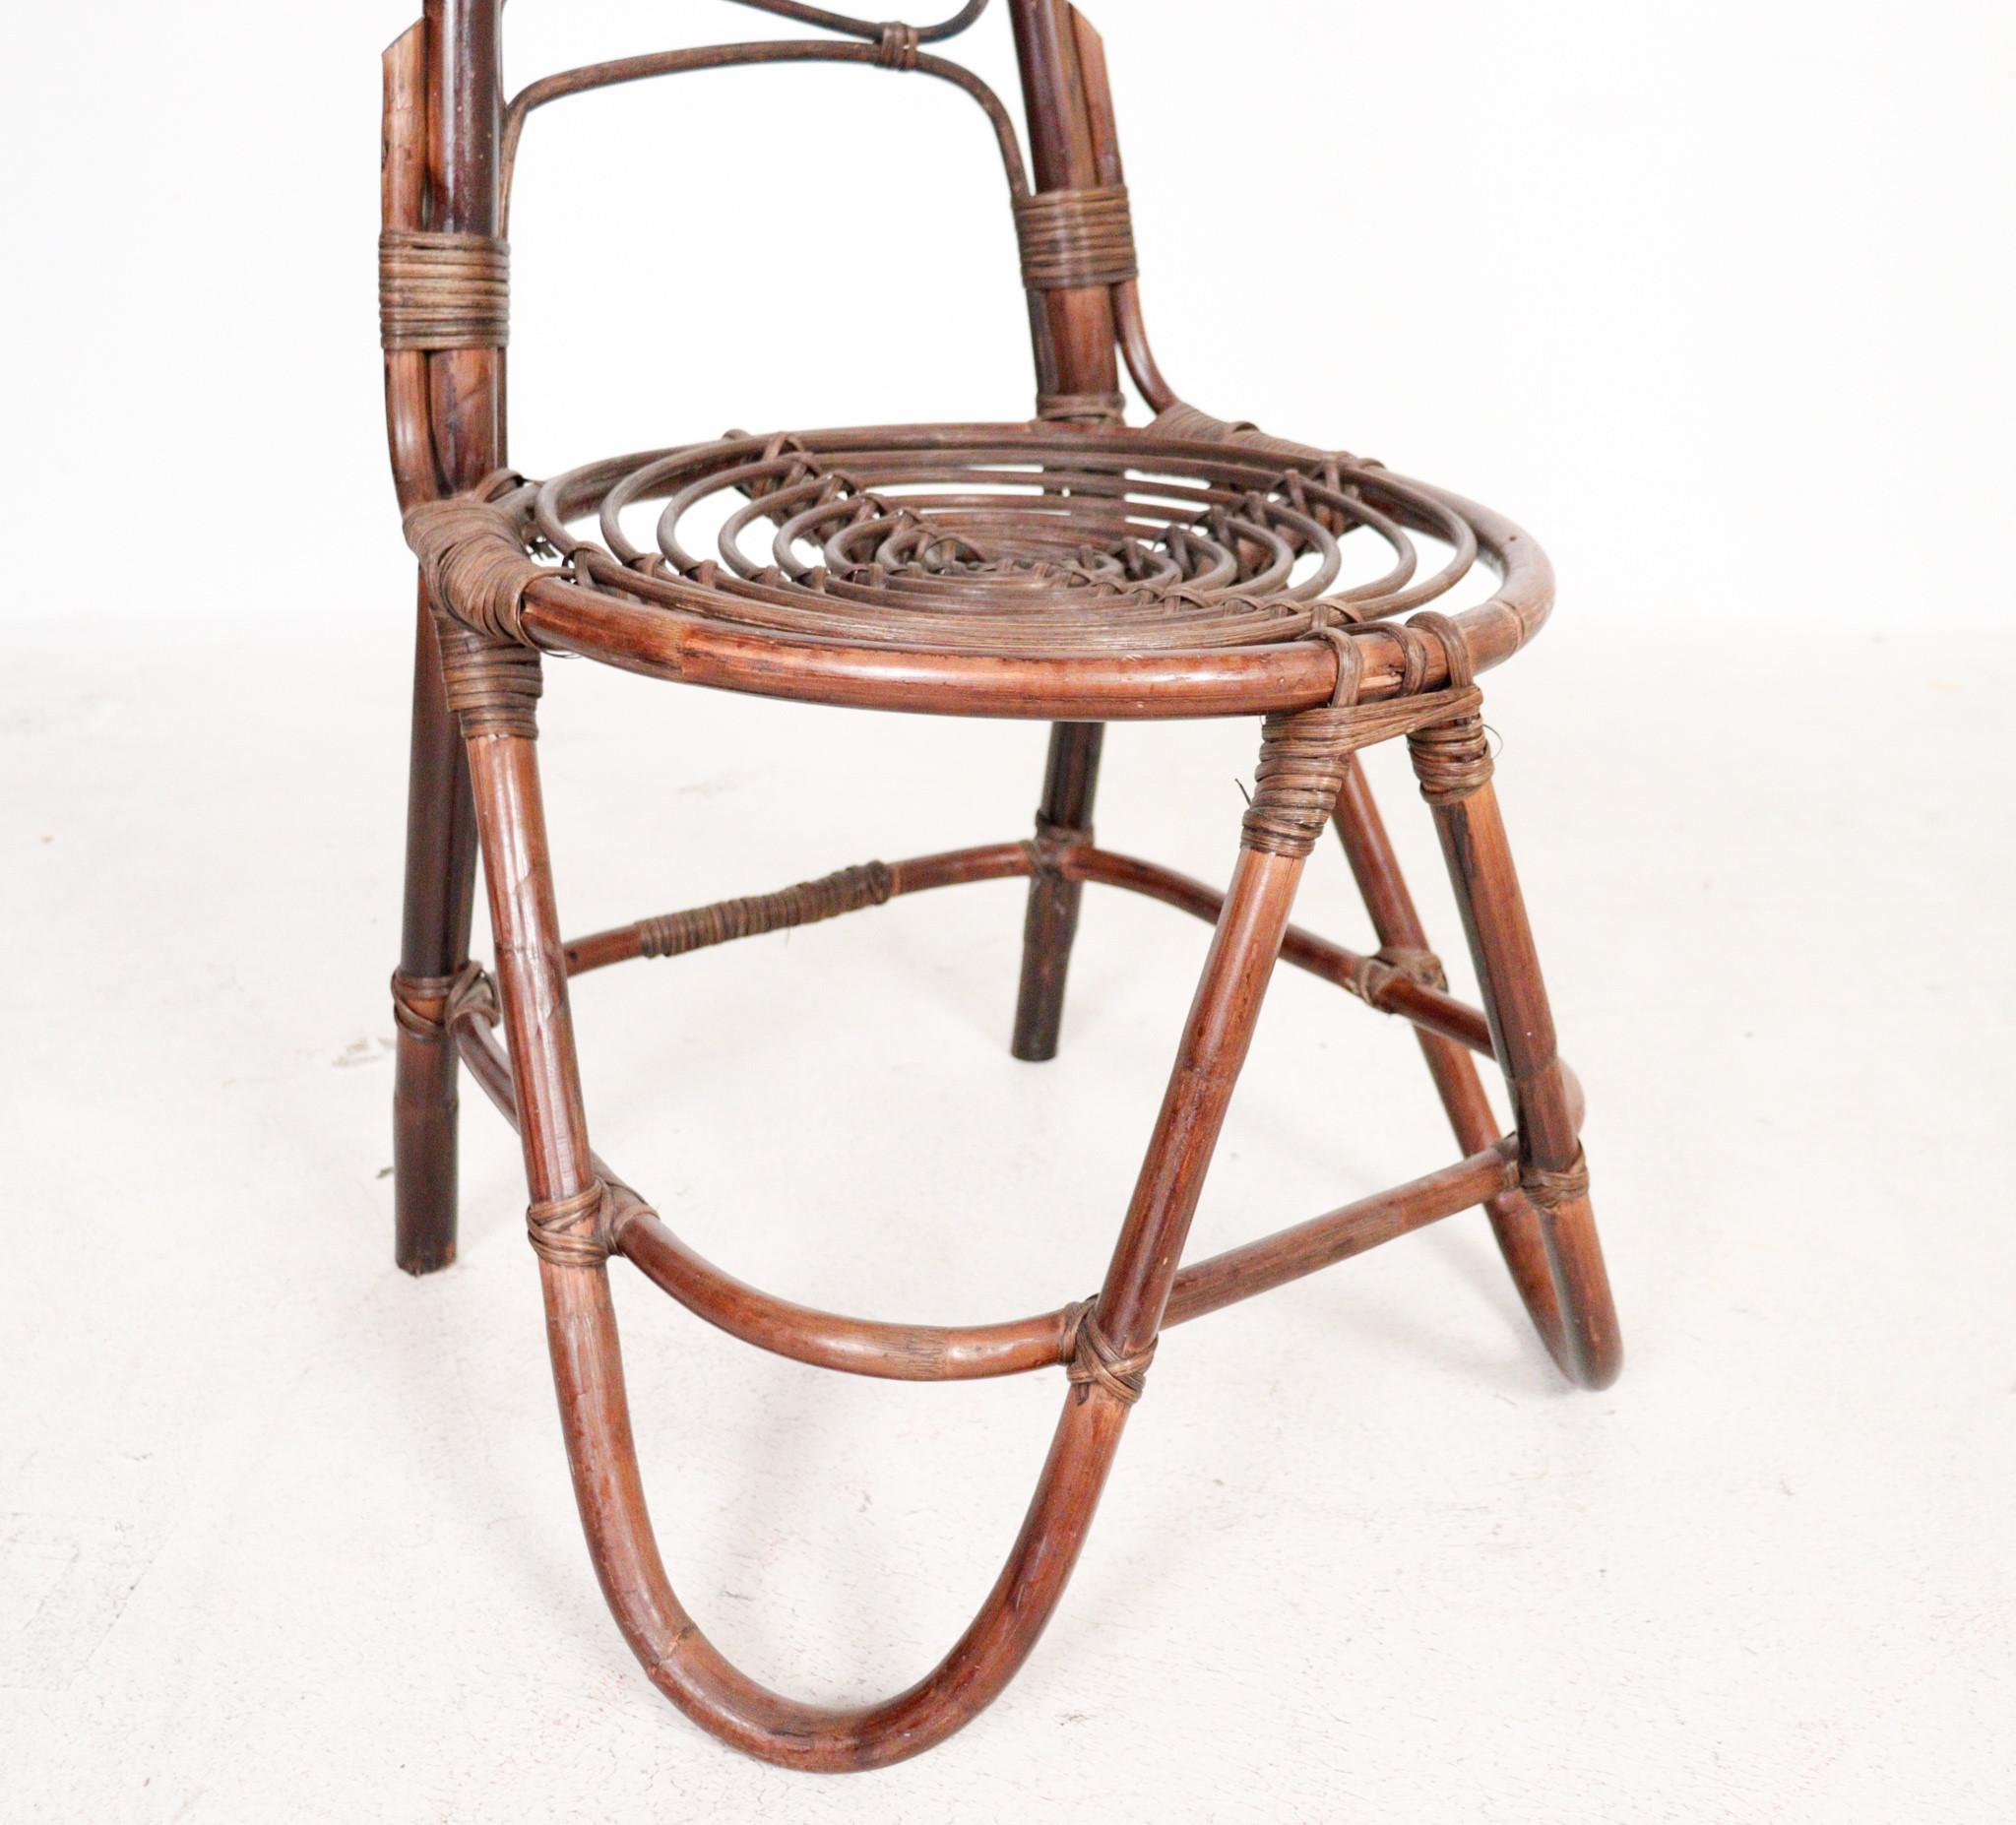 Bamboo chair by Dirk Van Sliedrecht, 1960s, dimensions approx.: H. 111 cm, W.
42 cm, D. 49 cm.
